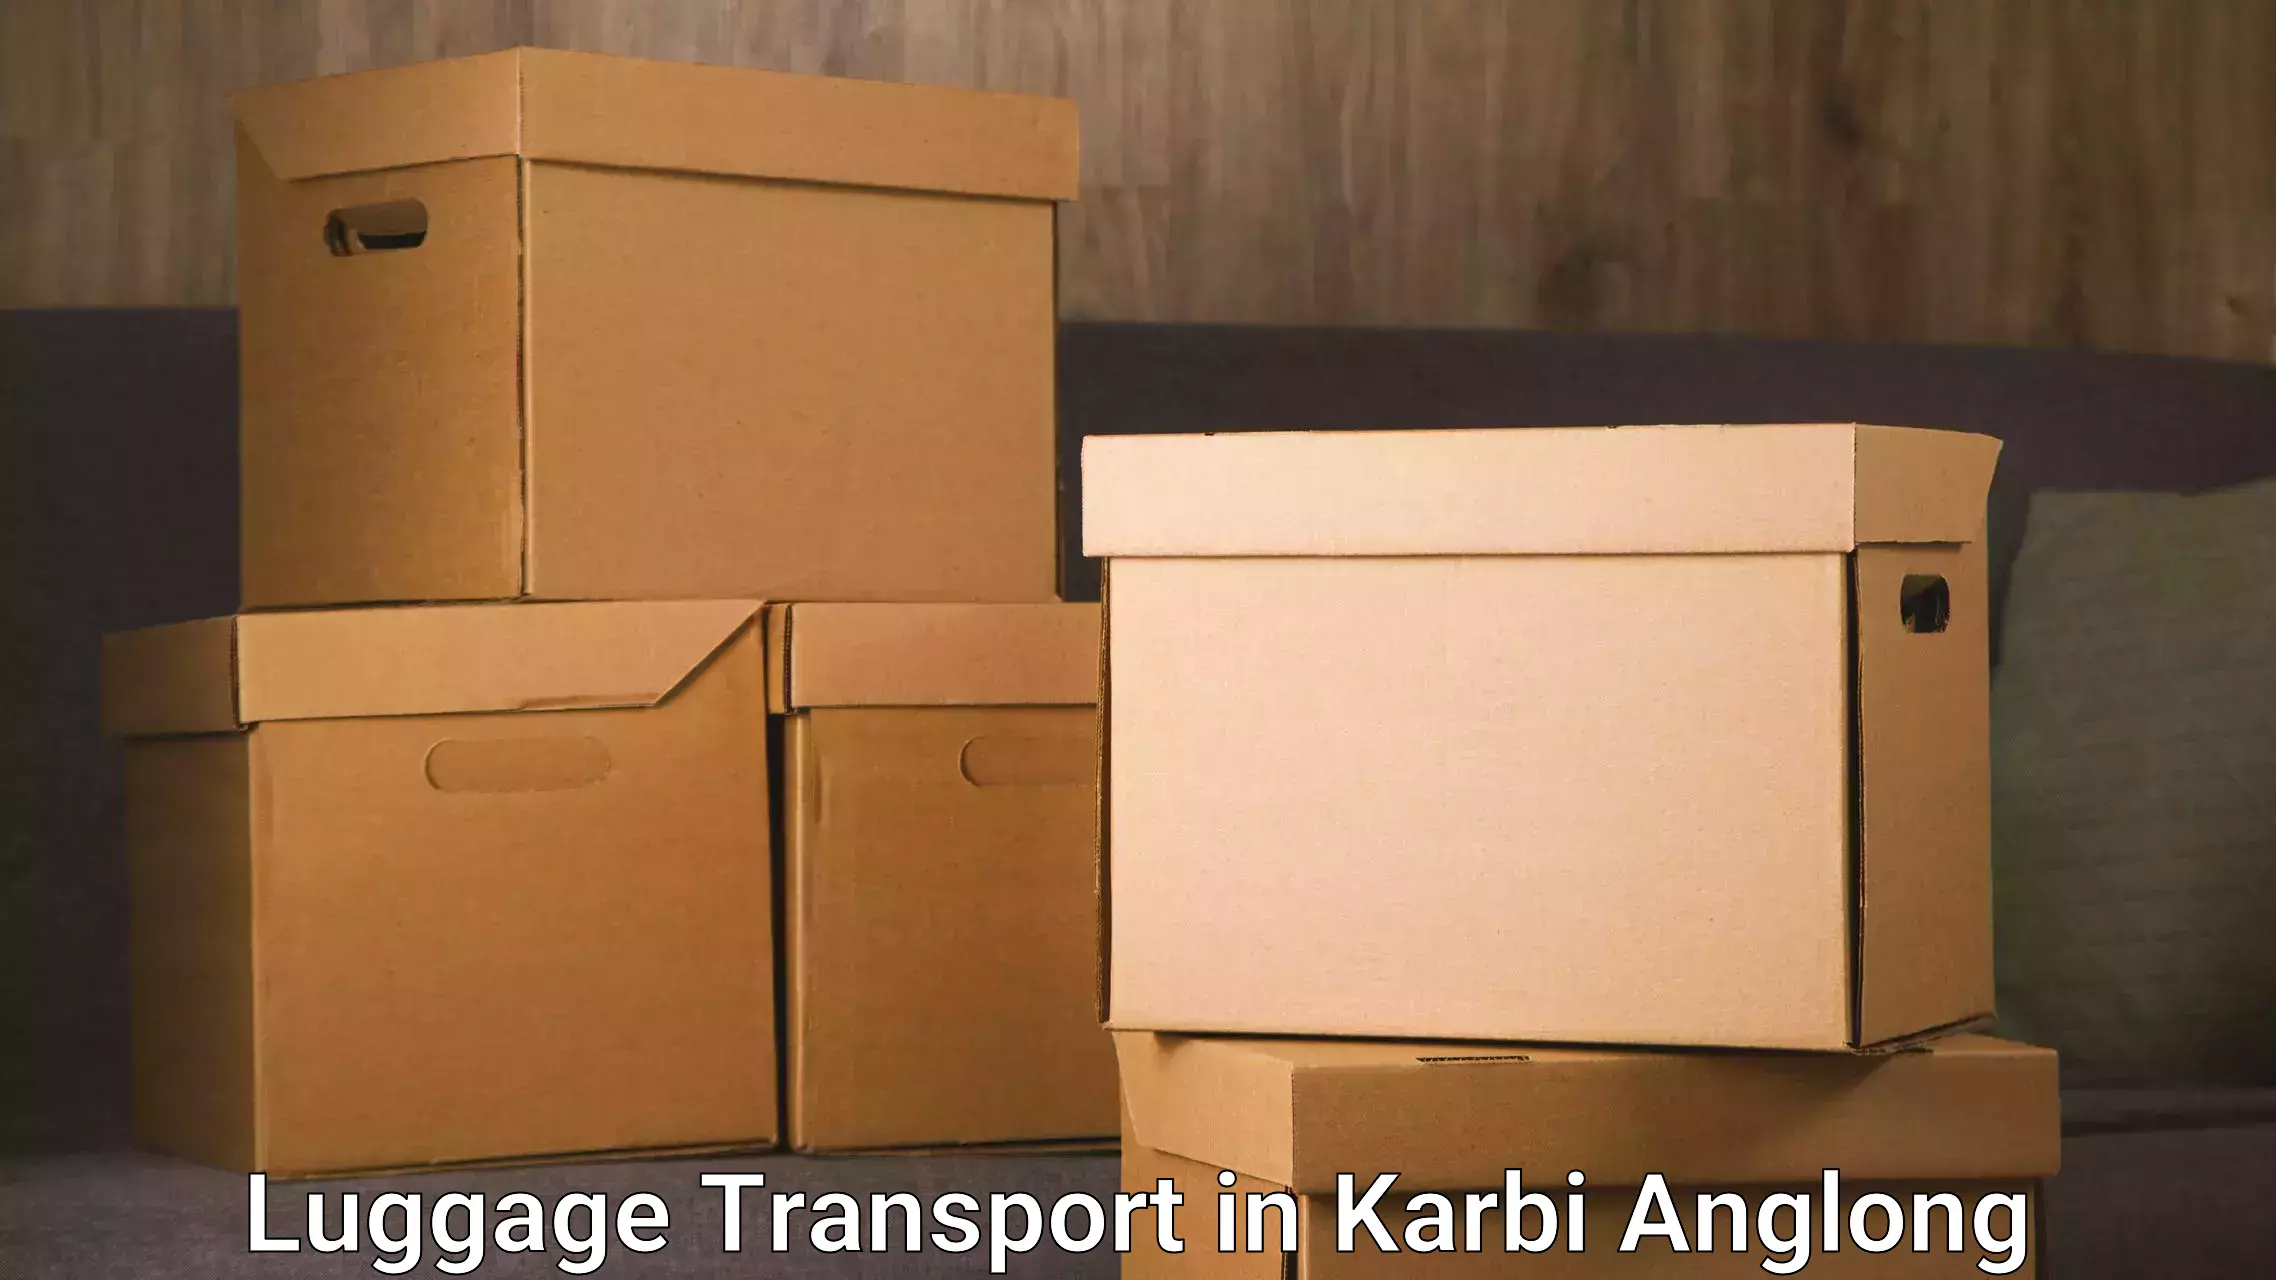 Rural baggage transport in Karbi Anglong